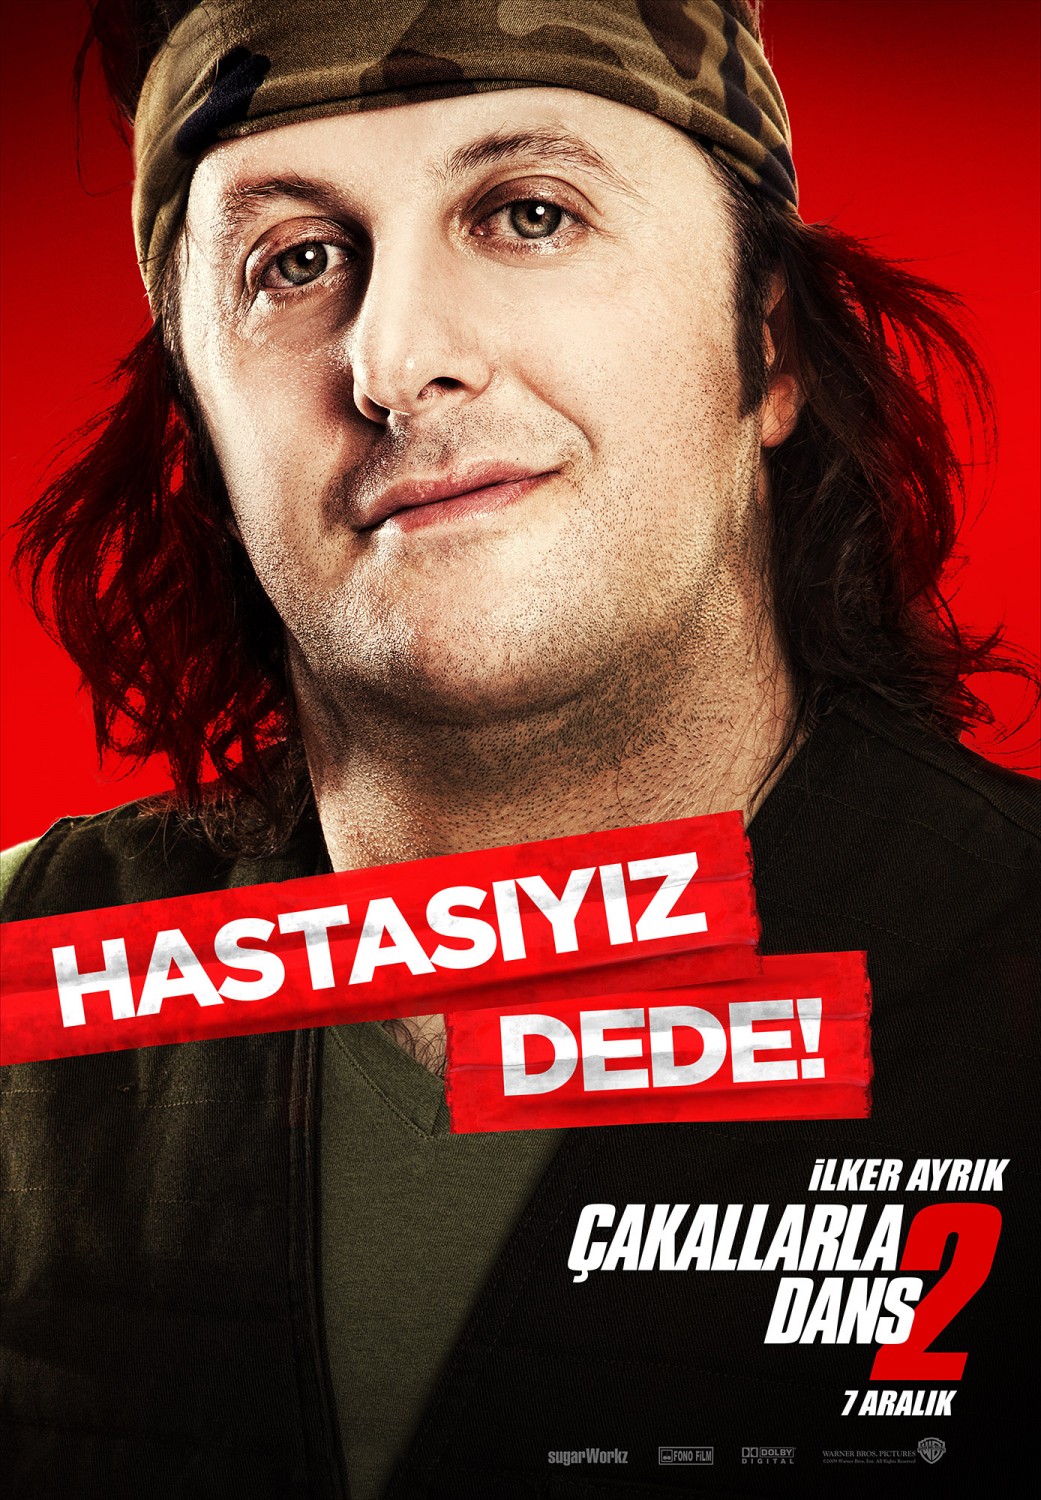 Extra Large Movie Poster Image for Çakallarla dans 2 (#5 of 9)